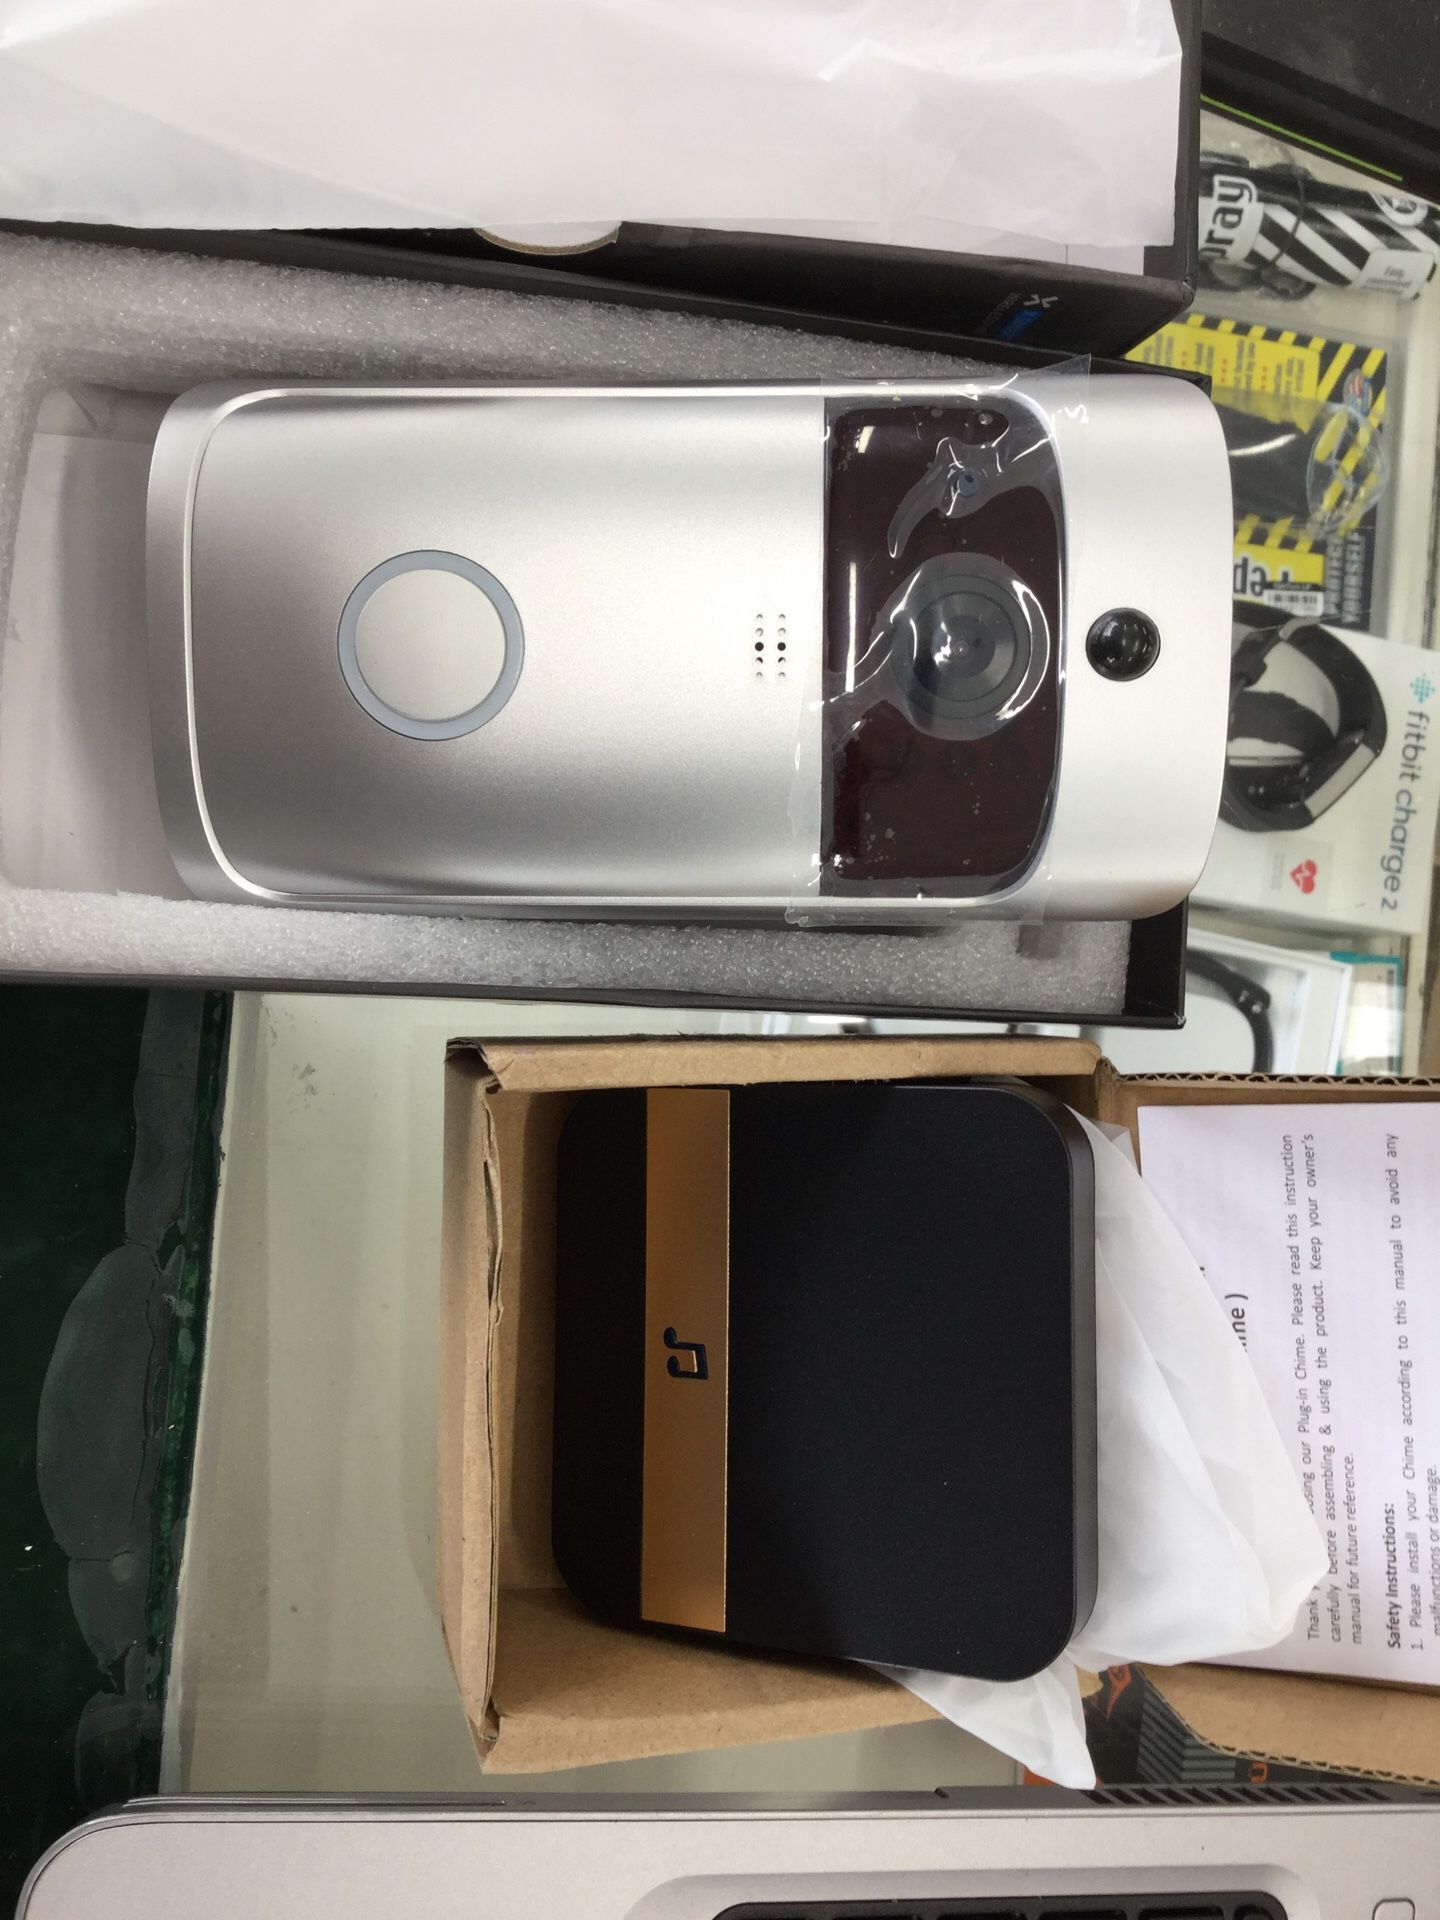 X Smart home wireless home wireless video doorbell silver opened box